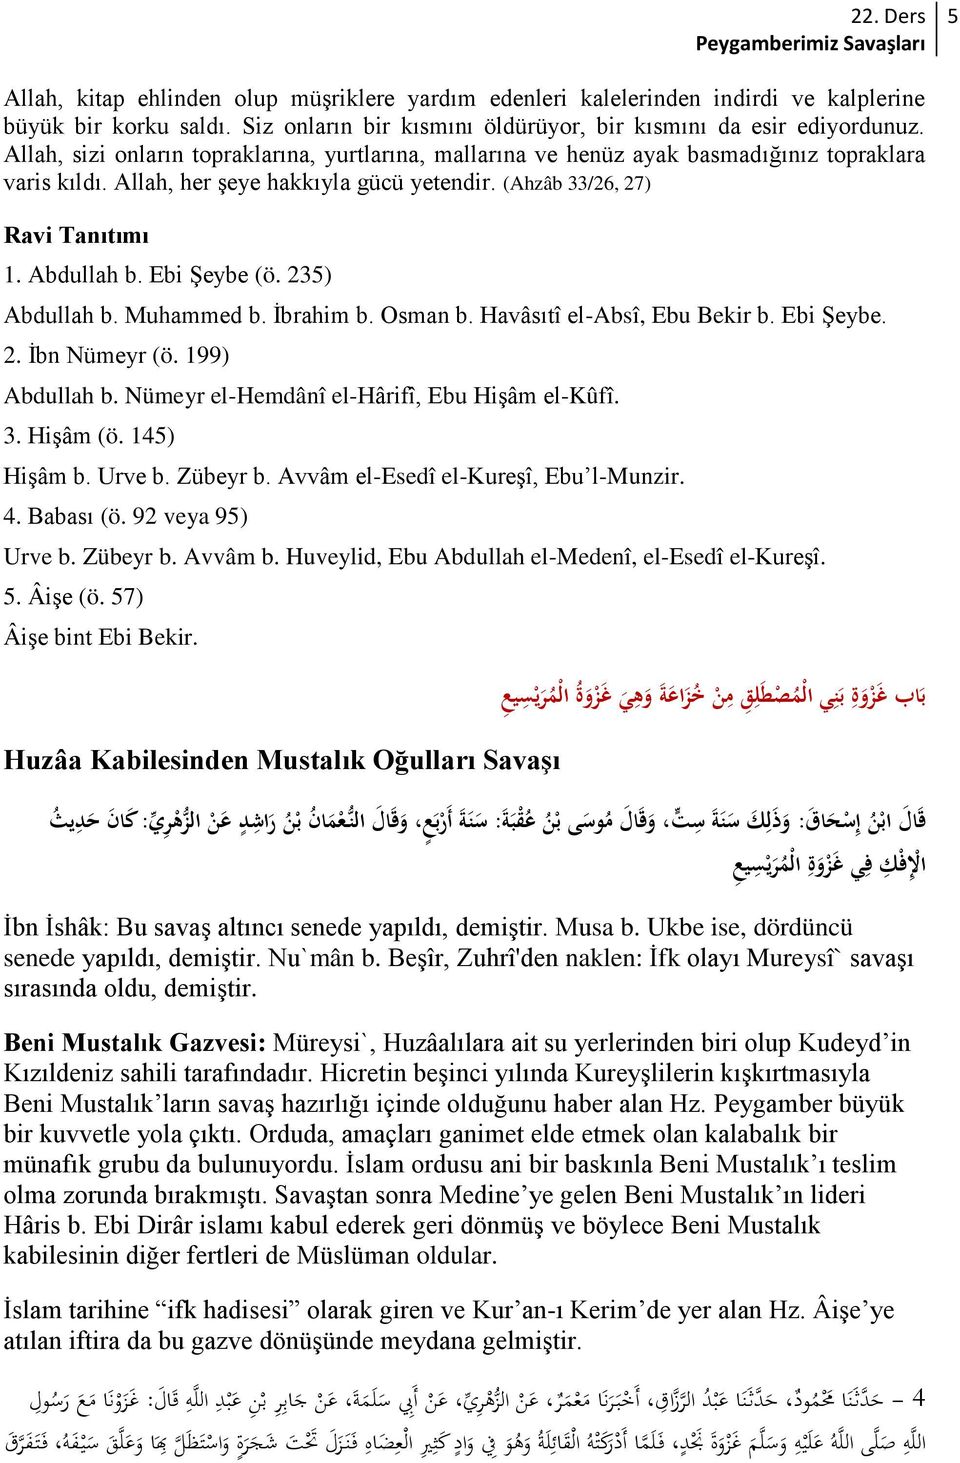 235) Abdullah b. Muhammed b. İbrahim b. Osman b. Havâsıtî el-absî, Ebu Bekir b. Ebi Şeybe. 2. İbn Nümeyr (ö. 199) Abdullah b. Nümeyr el-hemdânî el-hârifî, Ebu Hişâm el-kûfî. 3. Hişâm (ö. 145) Hişâm b.